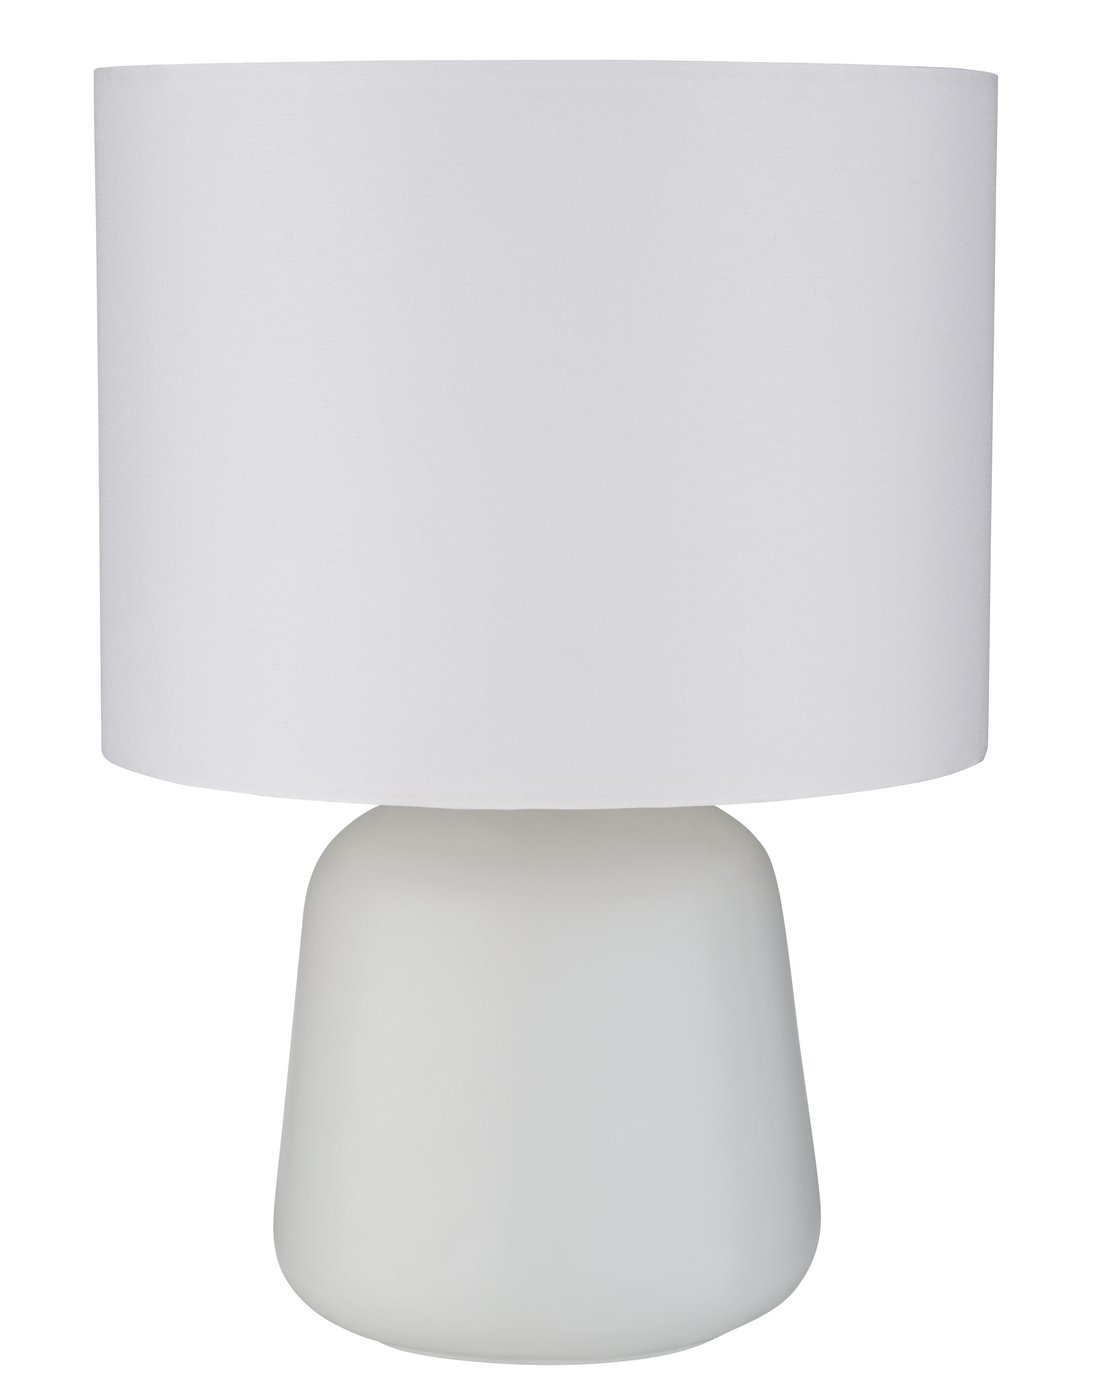 Argos Home Ceramic Table Lamp - White